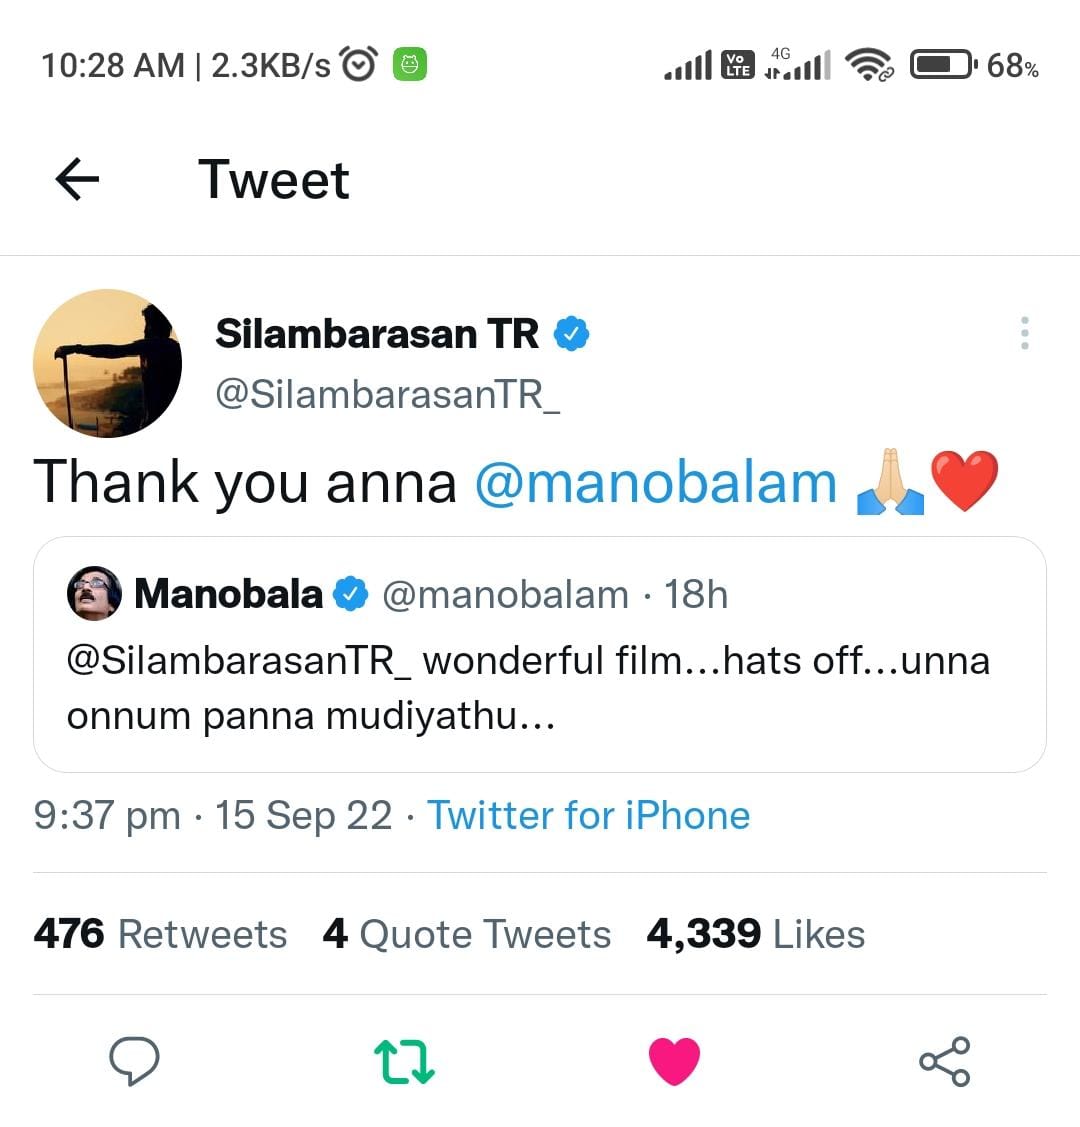 Actor Manobala tweet about VTK movie and Silambarasan TR